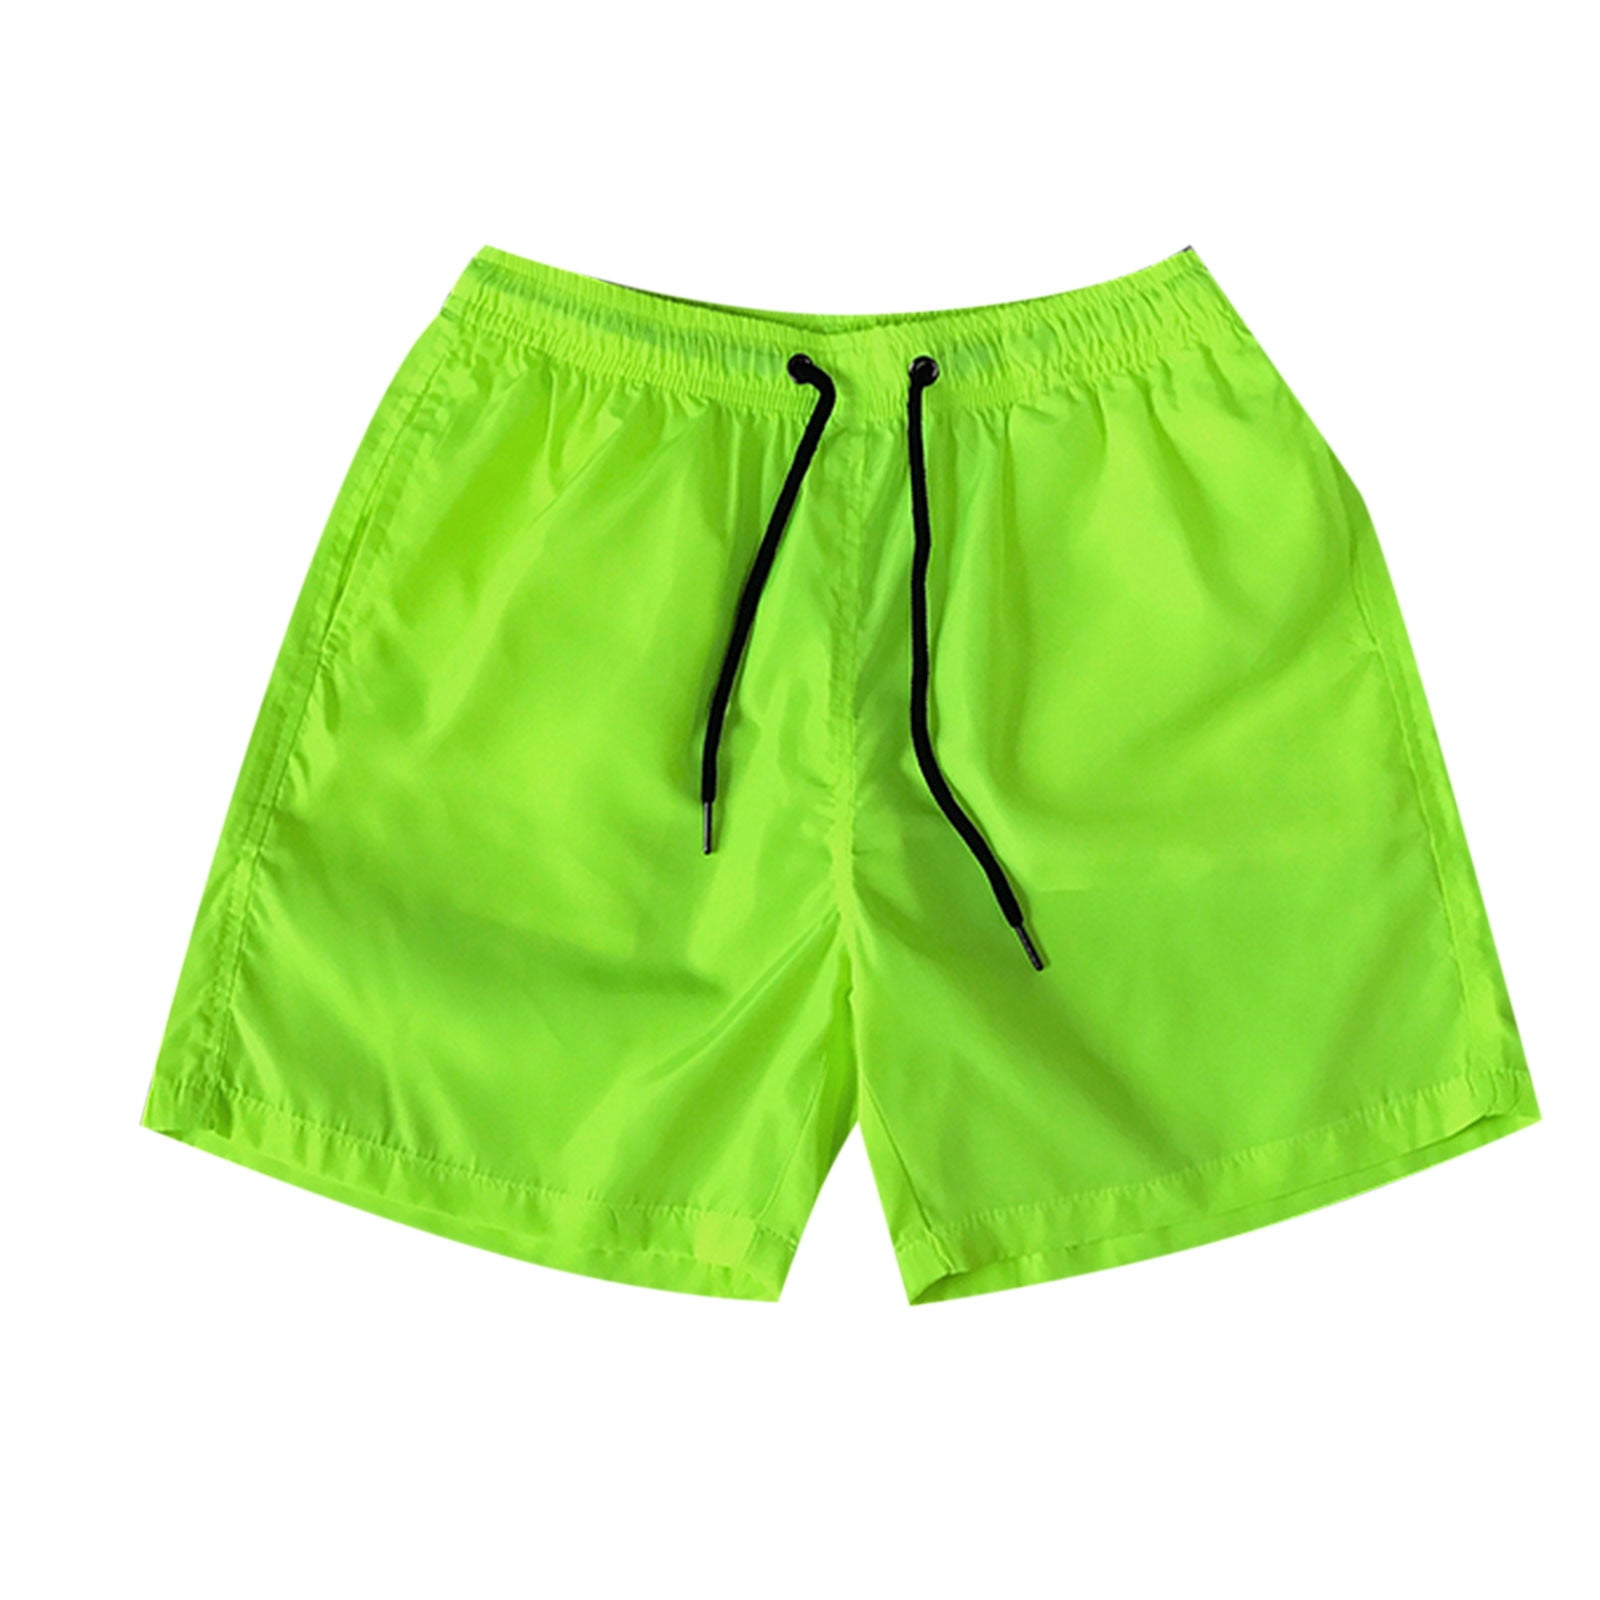 Pxkloy Mens Shorts Mens 3 Inch Swim Trunks Summer Quick Dry Lightweight ...